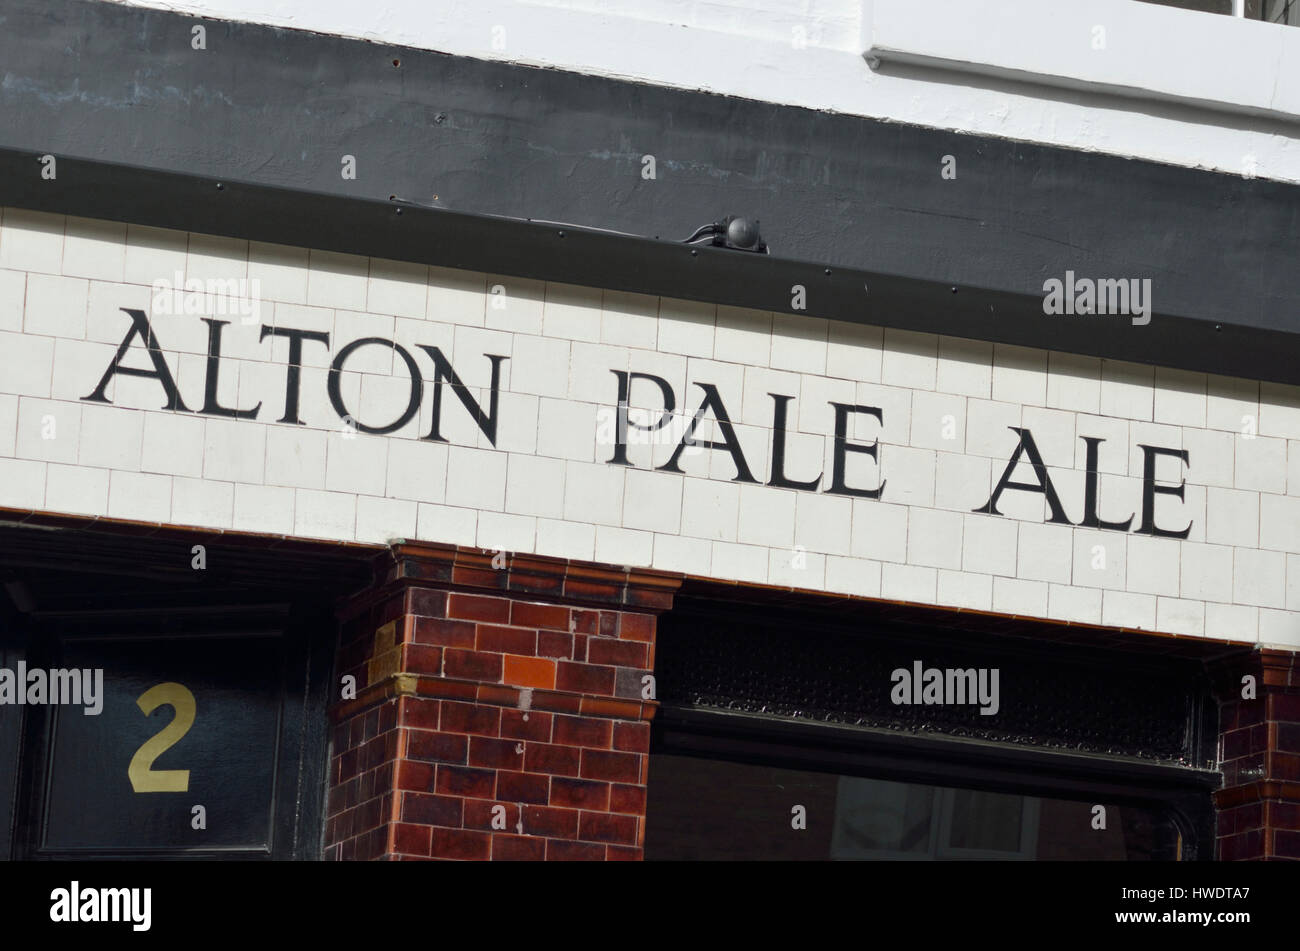 Alton Pale Ale sign outside a pub, London, UK. Stock Photo